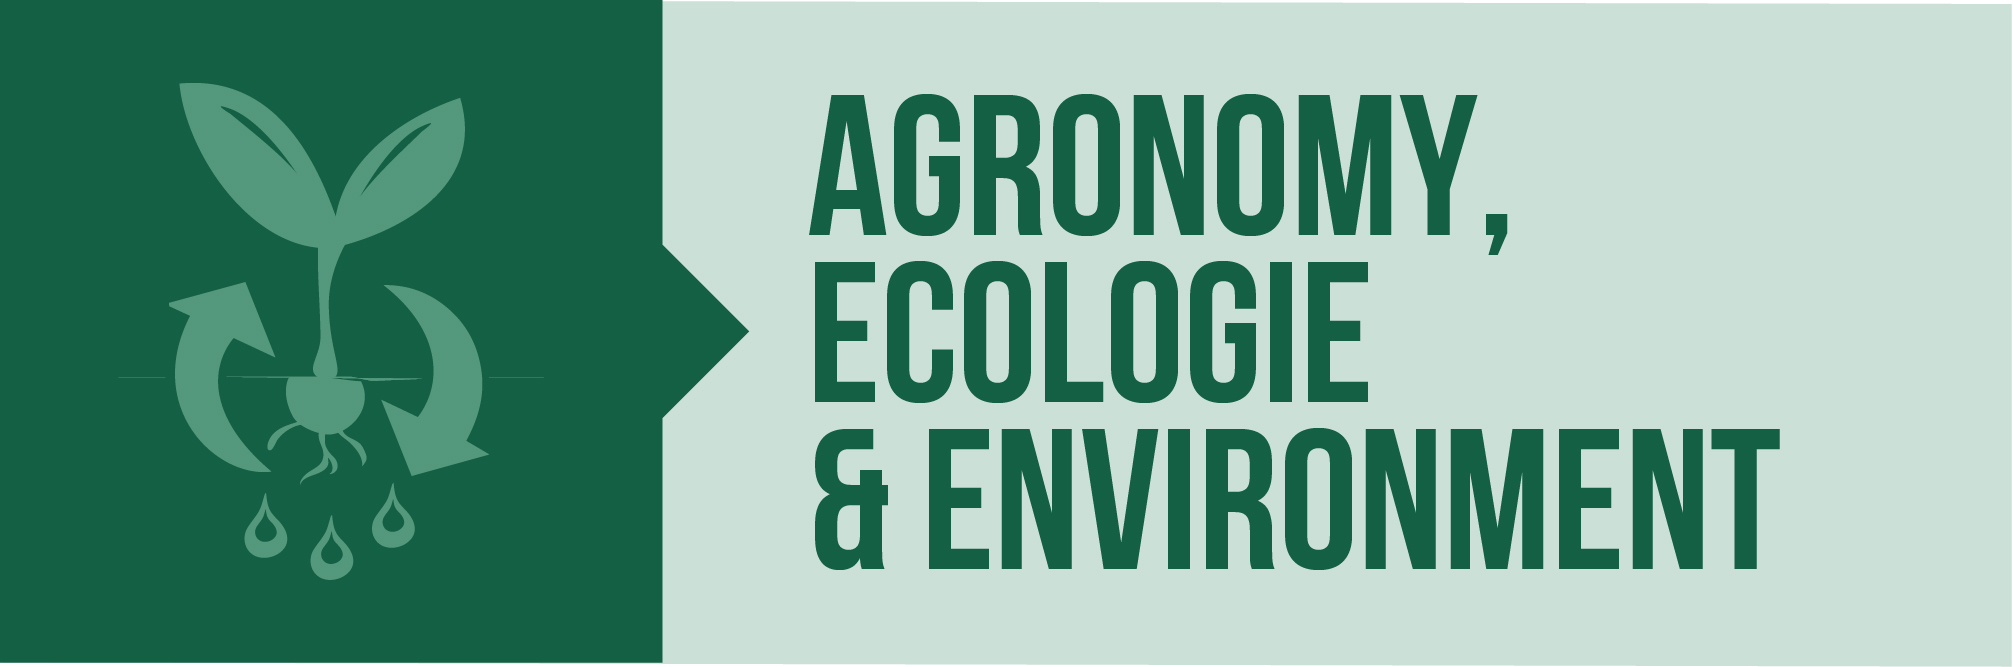 axlr-satt-montpellier-offres-technologiques-agronomy-ecologie-environment